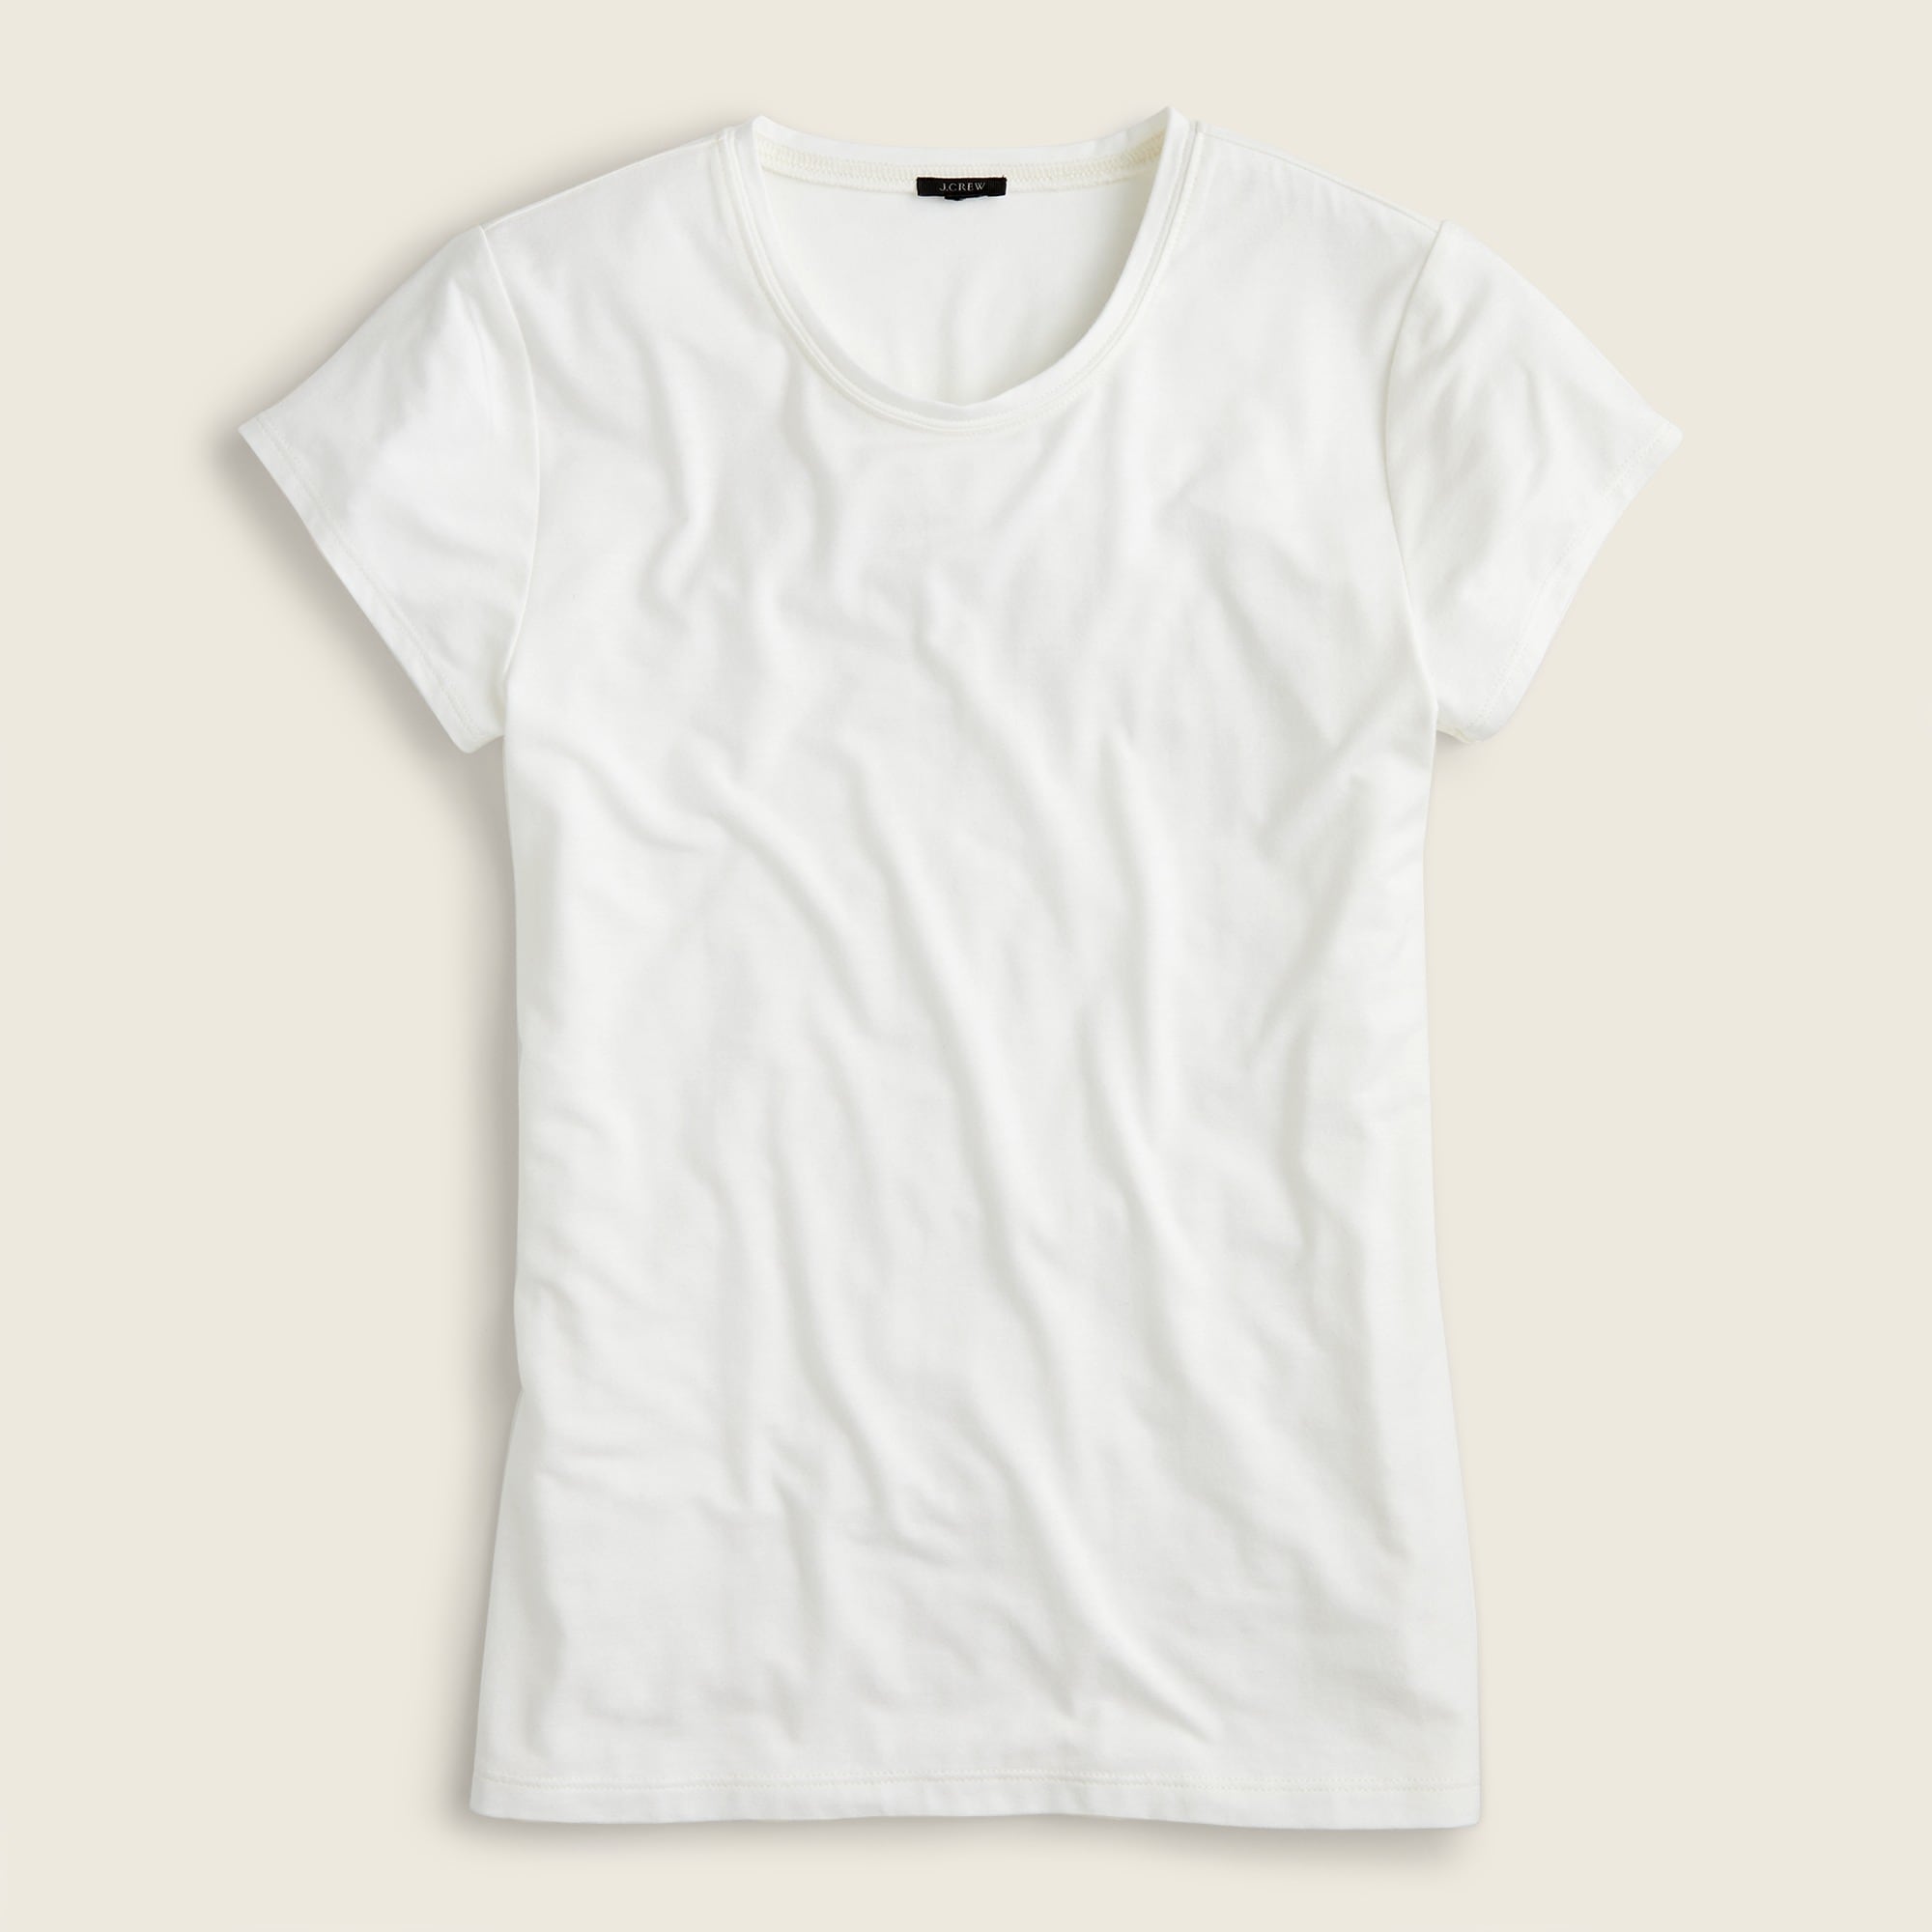 women's white stretch t shirt